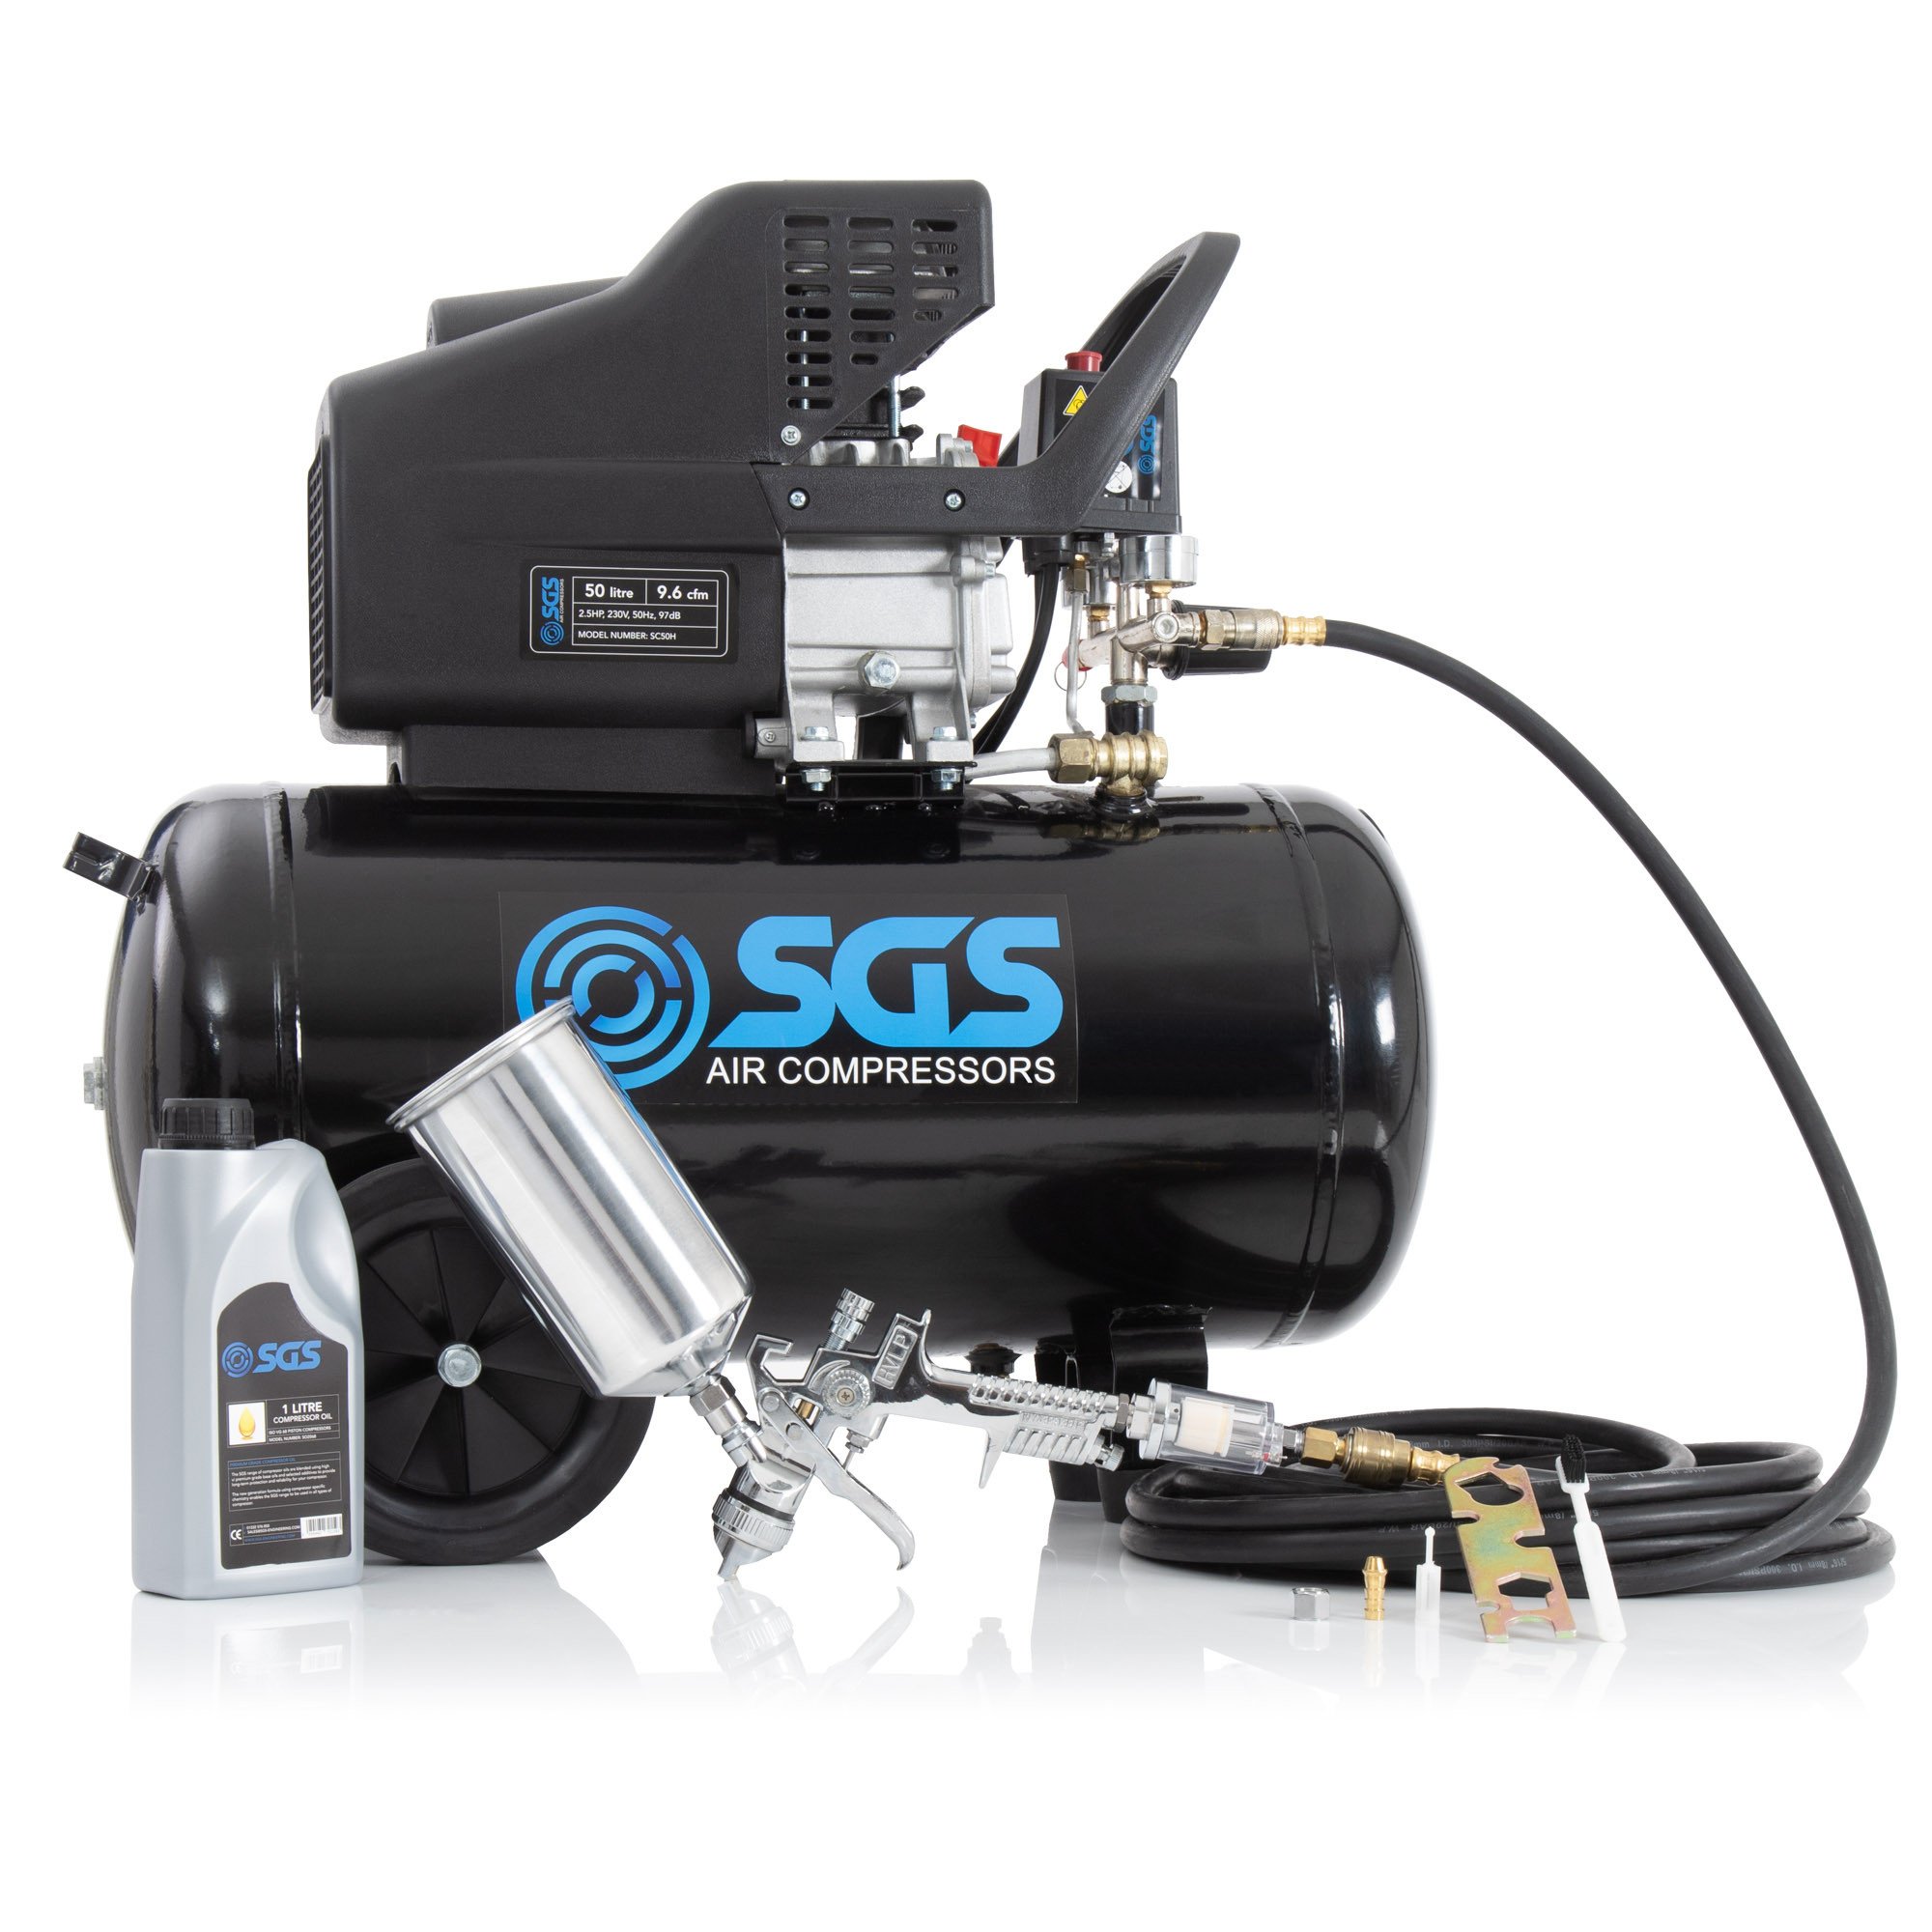 SGS 50升直接驱动空气压缩机和喷枪套件-9.6CFM 2.5HP 50L